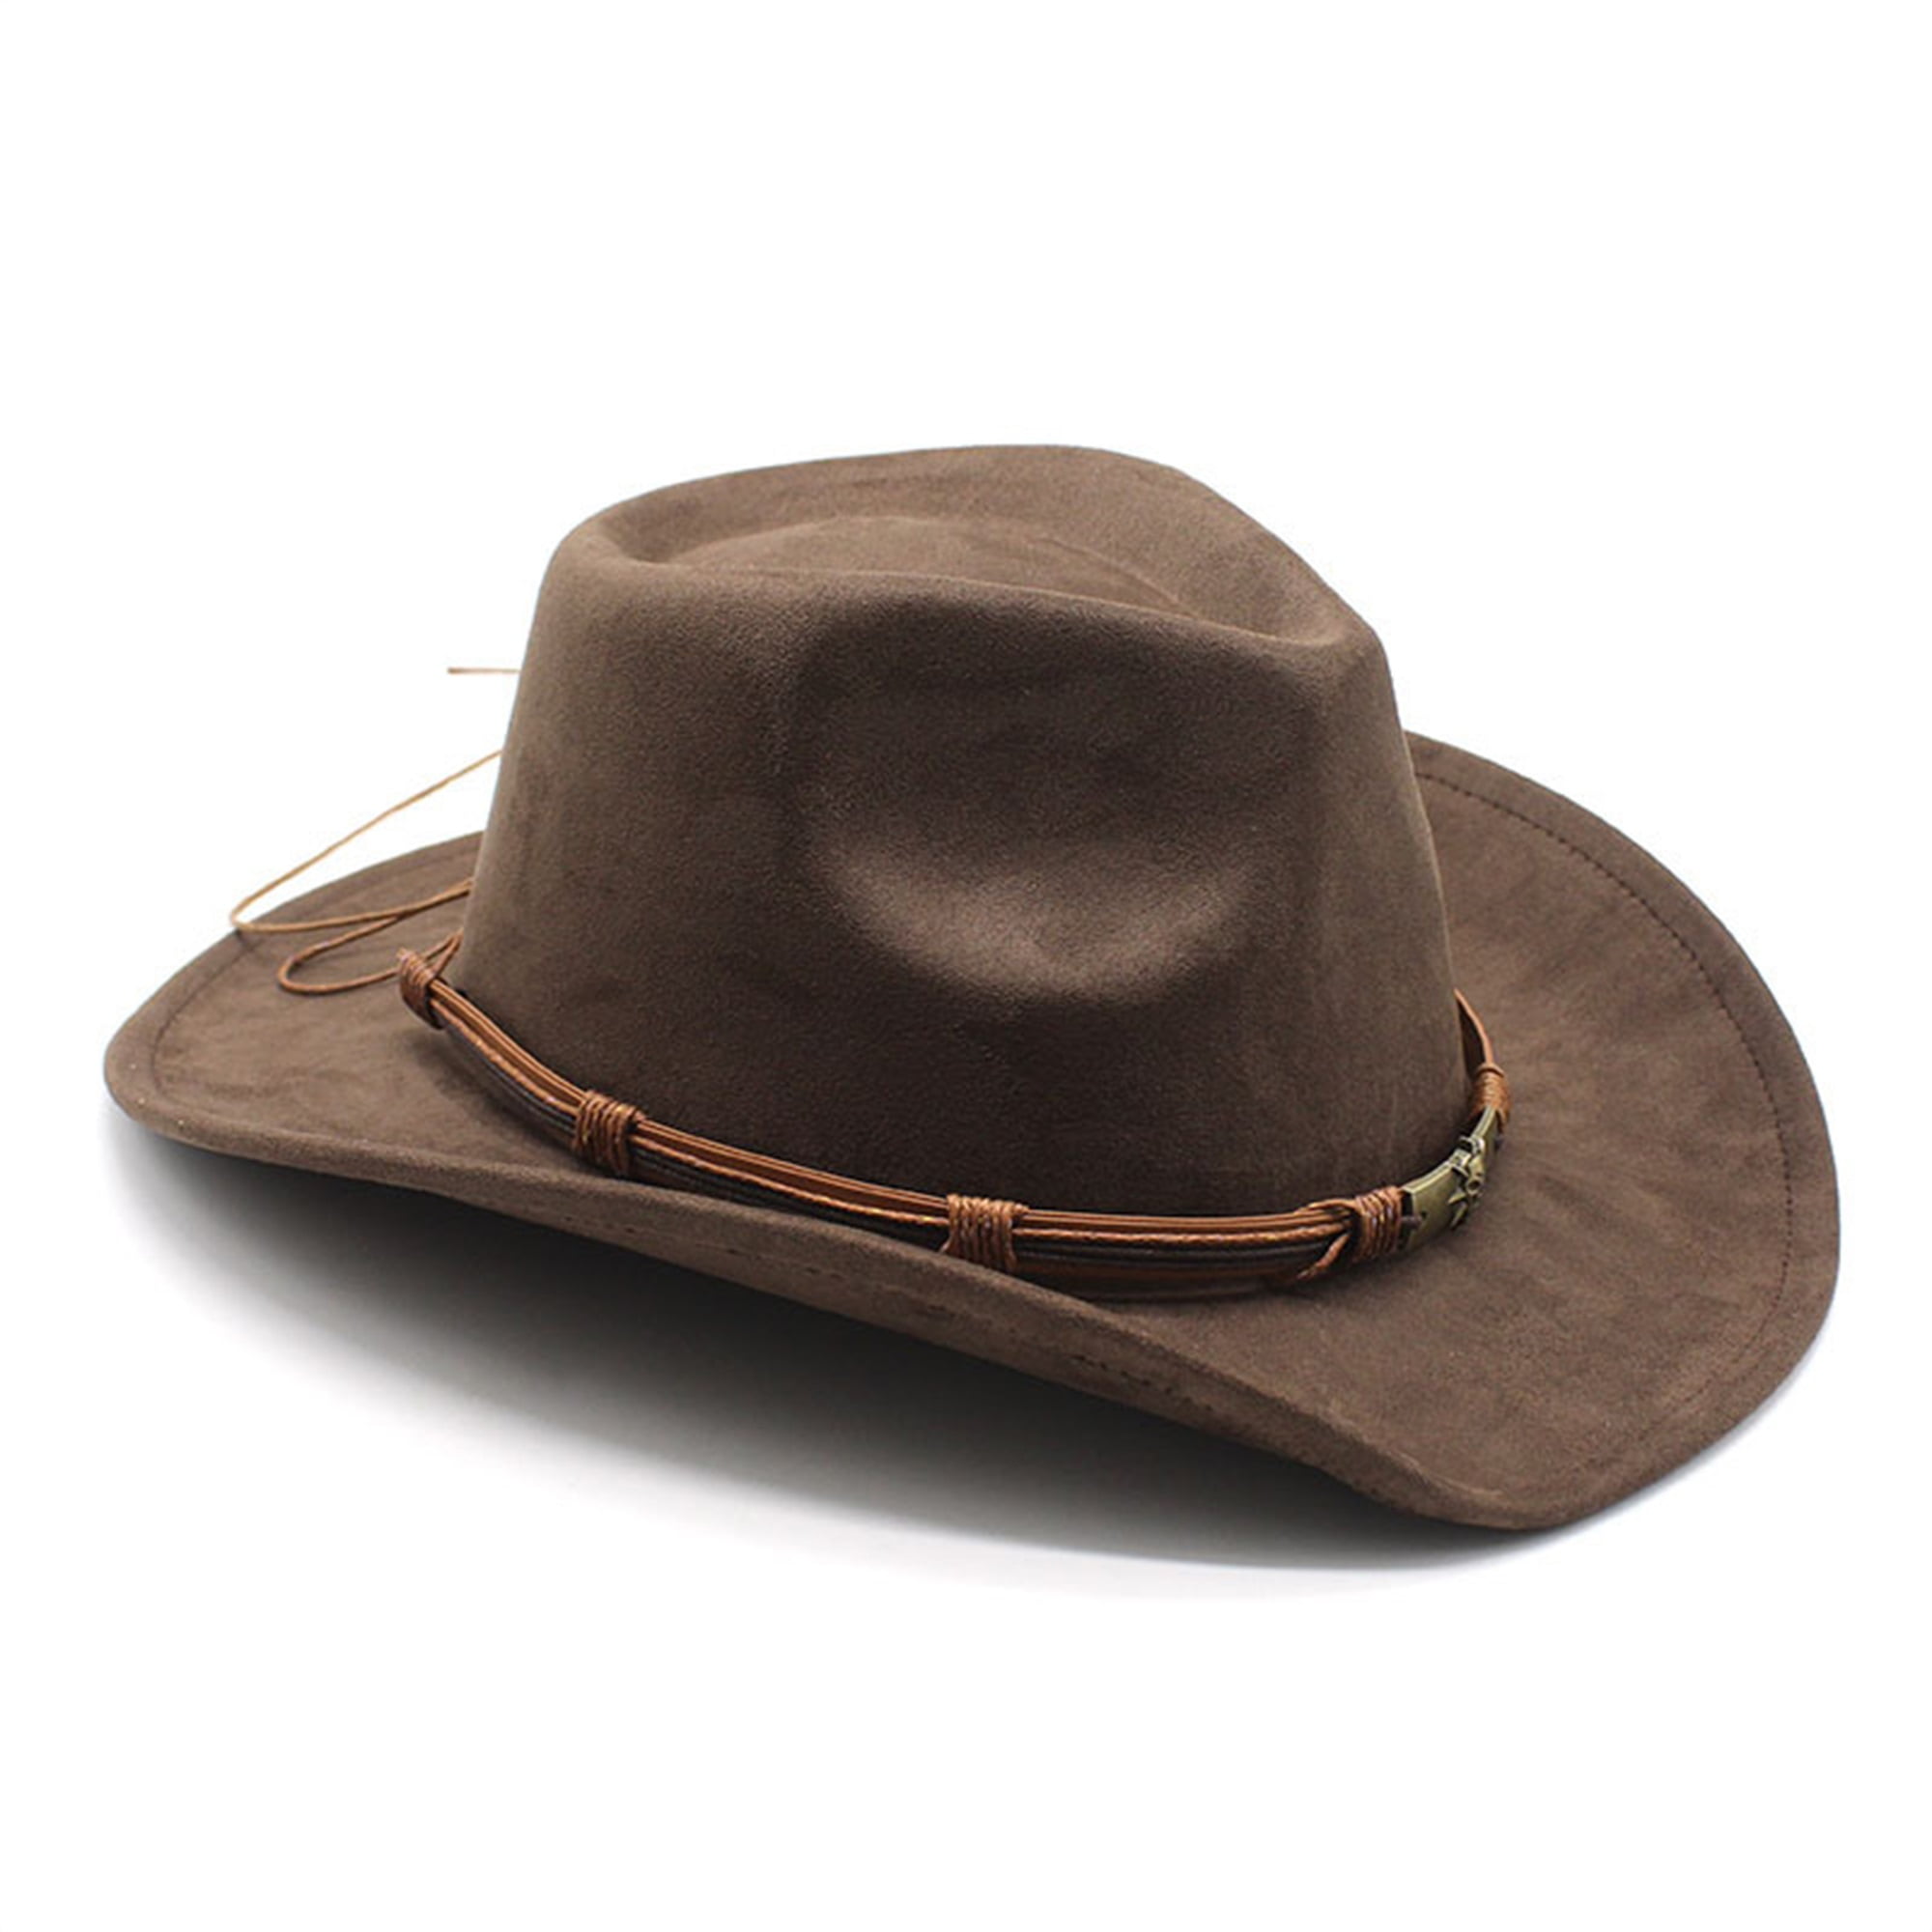 Sunisery Women Men Vintage Western Cowboy Hats Retro Feather Fedora Felt  Wide Brim Hat Hiking Rave Party Travel Costume Accessory 